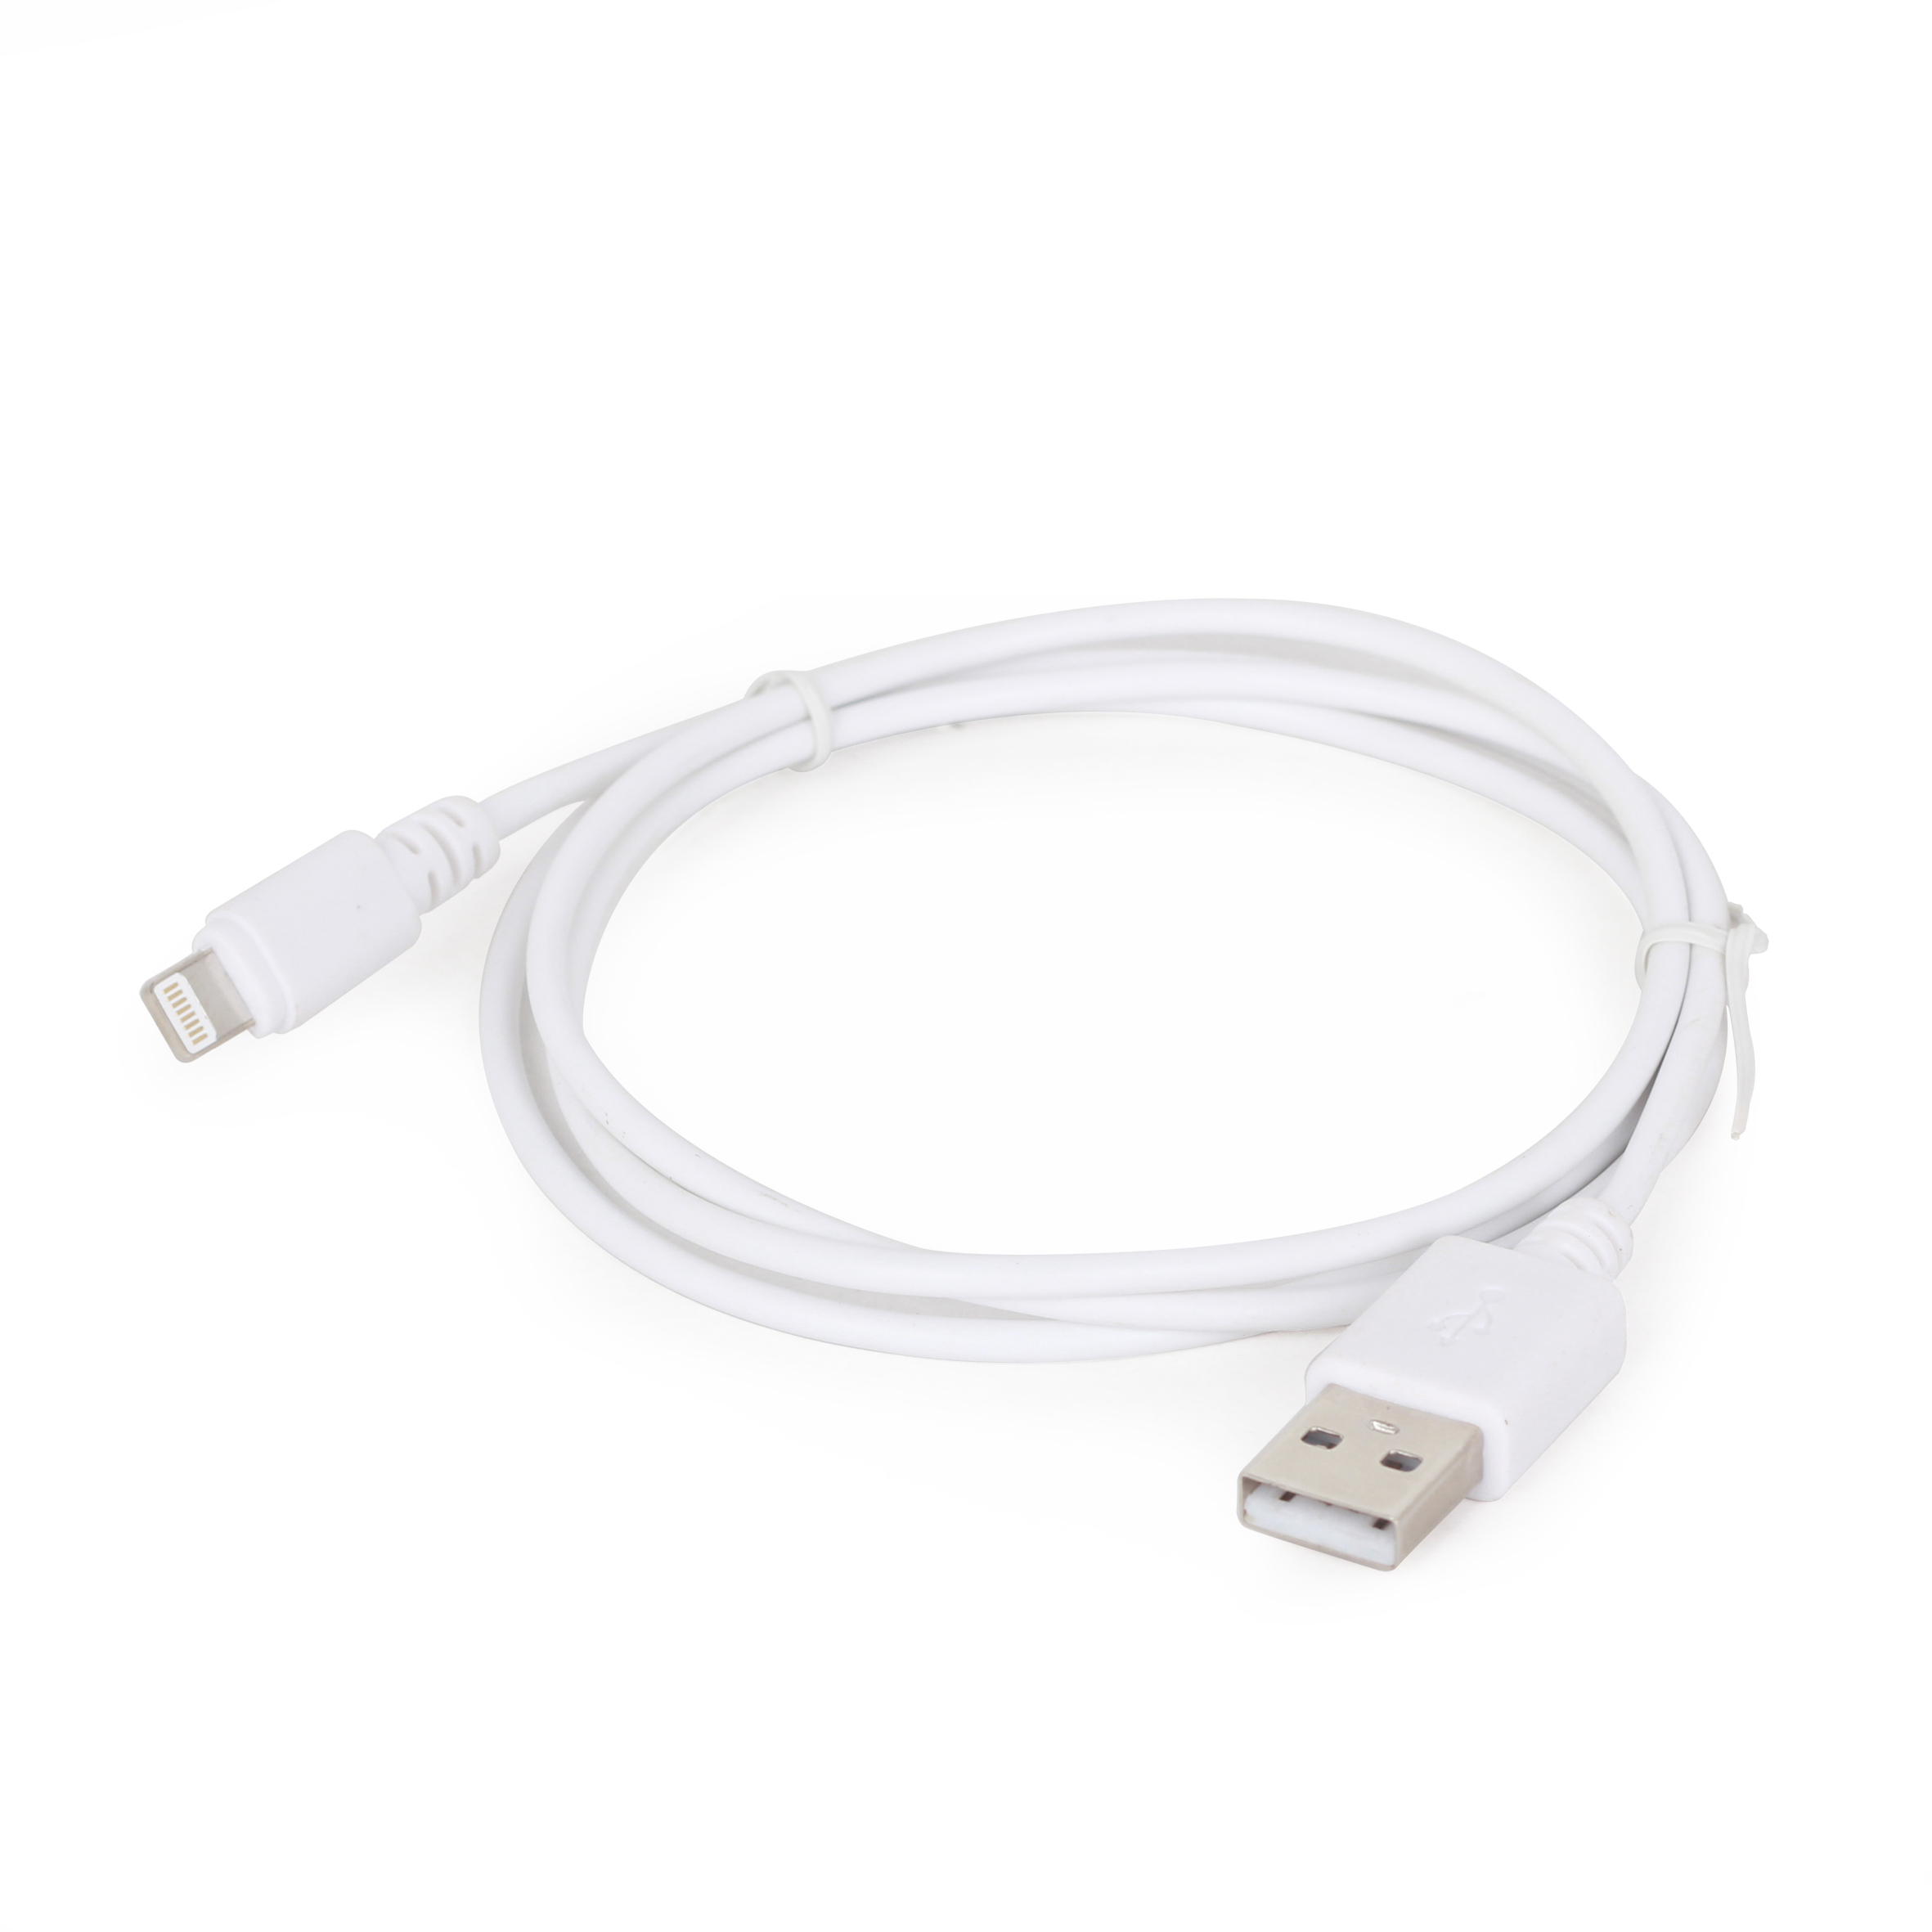 Gembird Apple USB laadkabel, 2 meter, wit *USBAM, *LIGHTNINGM